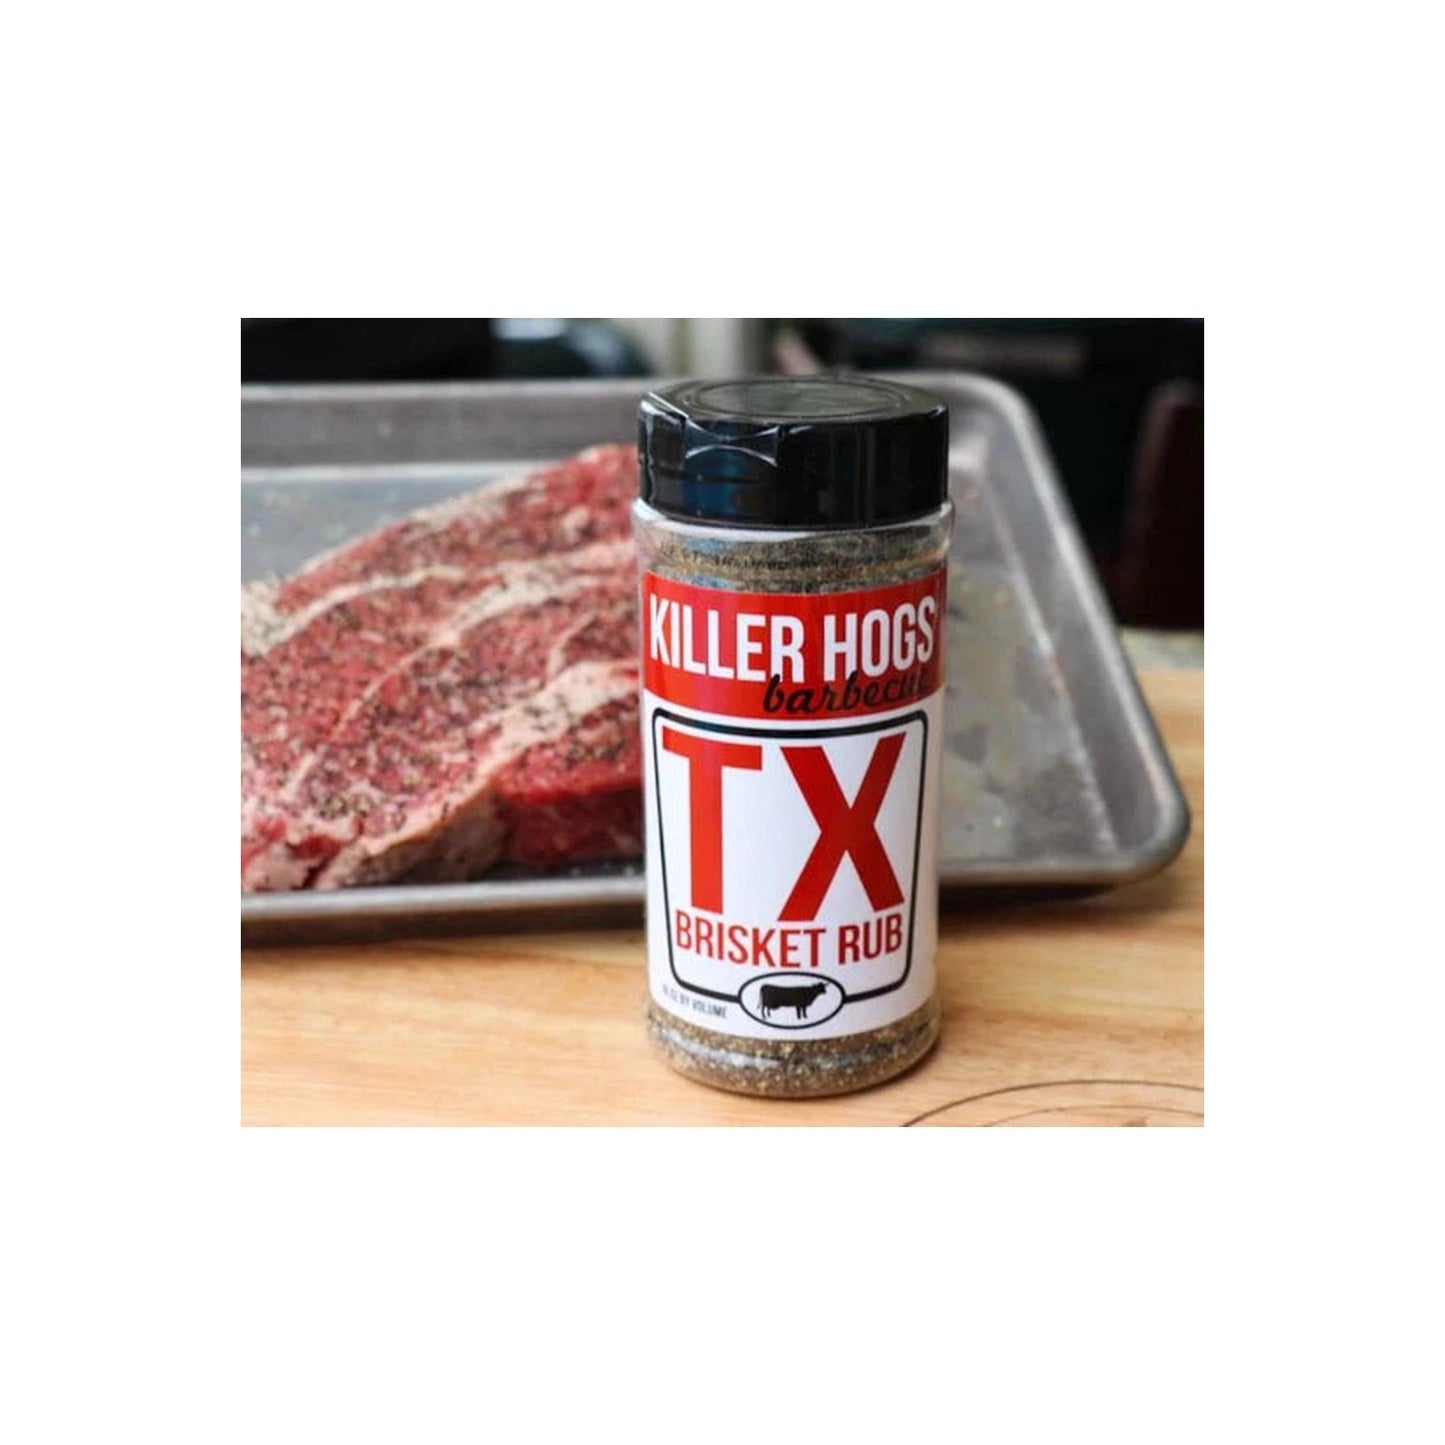 Killer Hogs TX Brisket Rub Killer Hogs Barbecue Chilliwack BBQ Supply